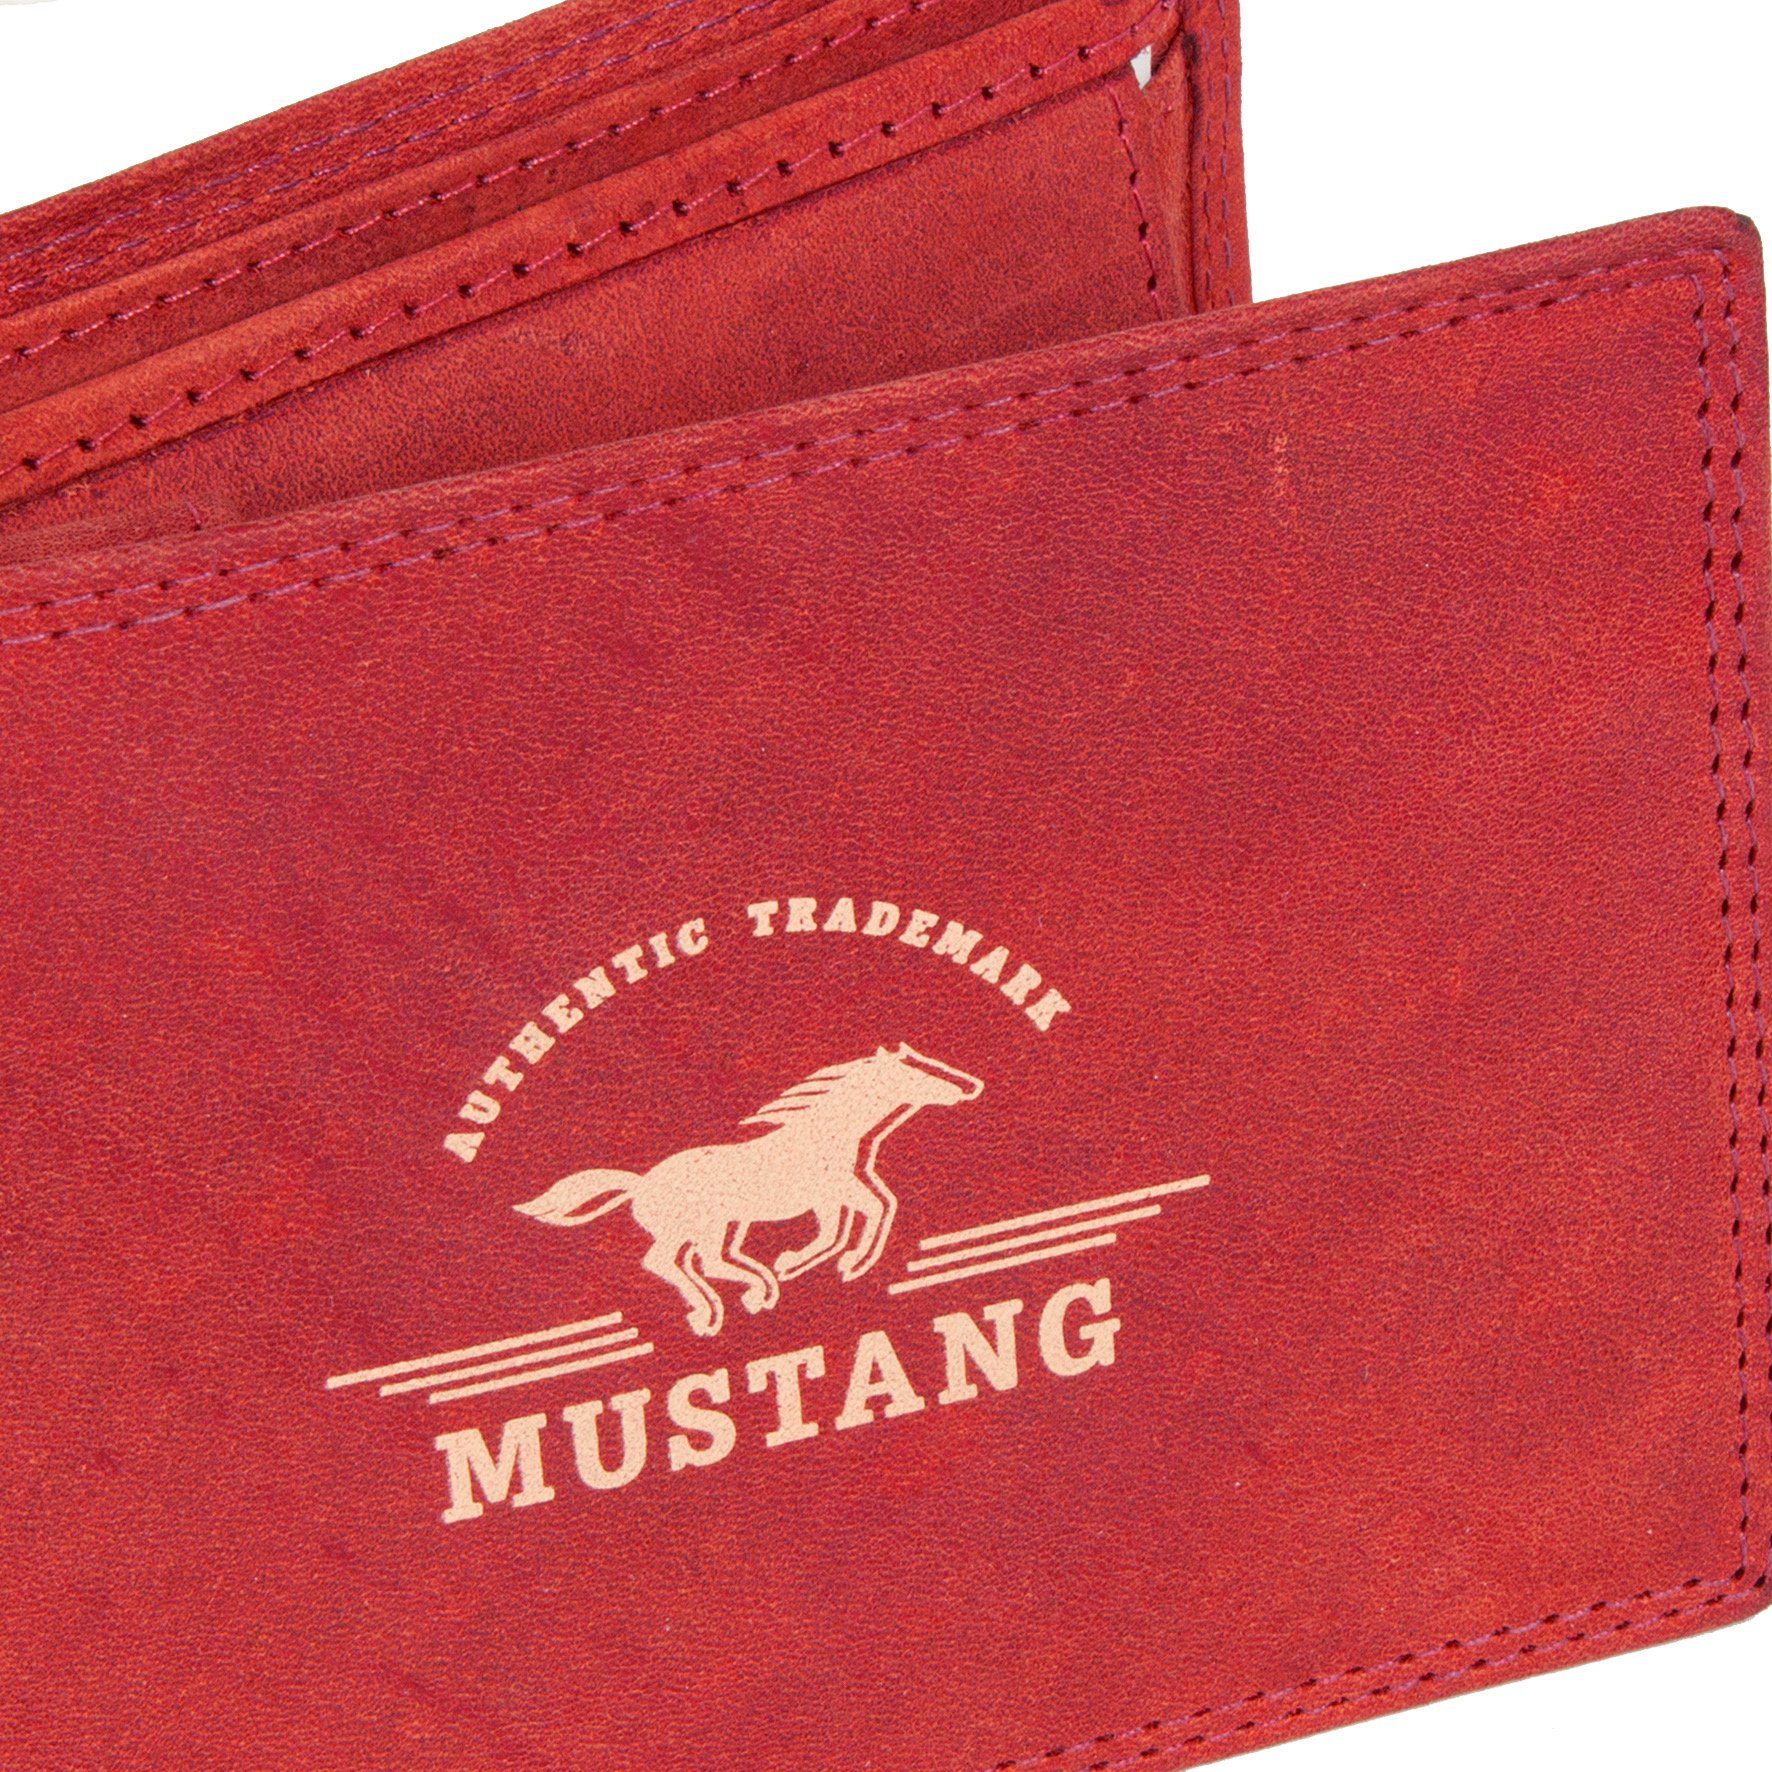 opening, leather Tampa MUSTANG long side mit wallet Logo Geldbörse red Print